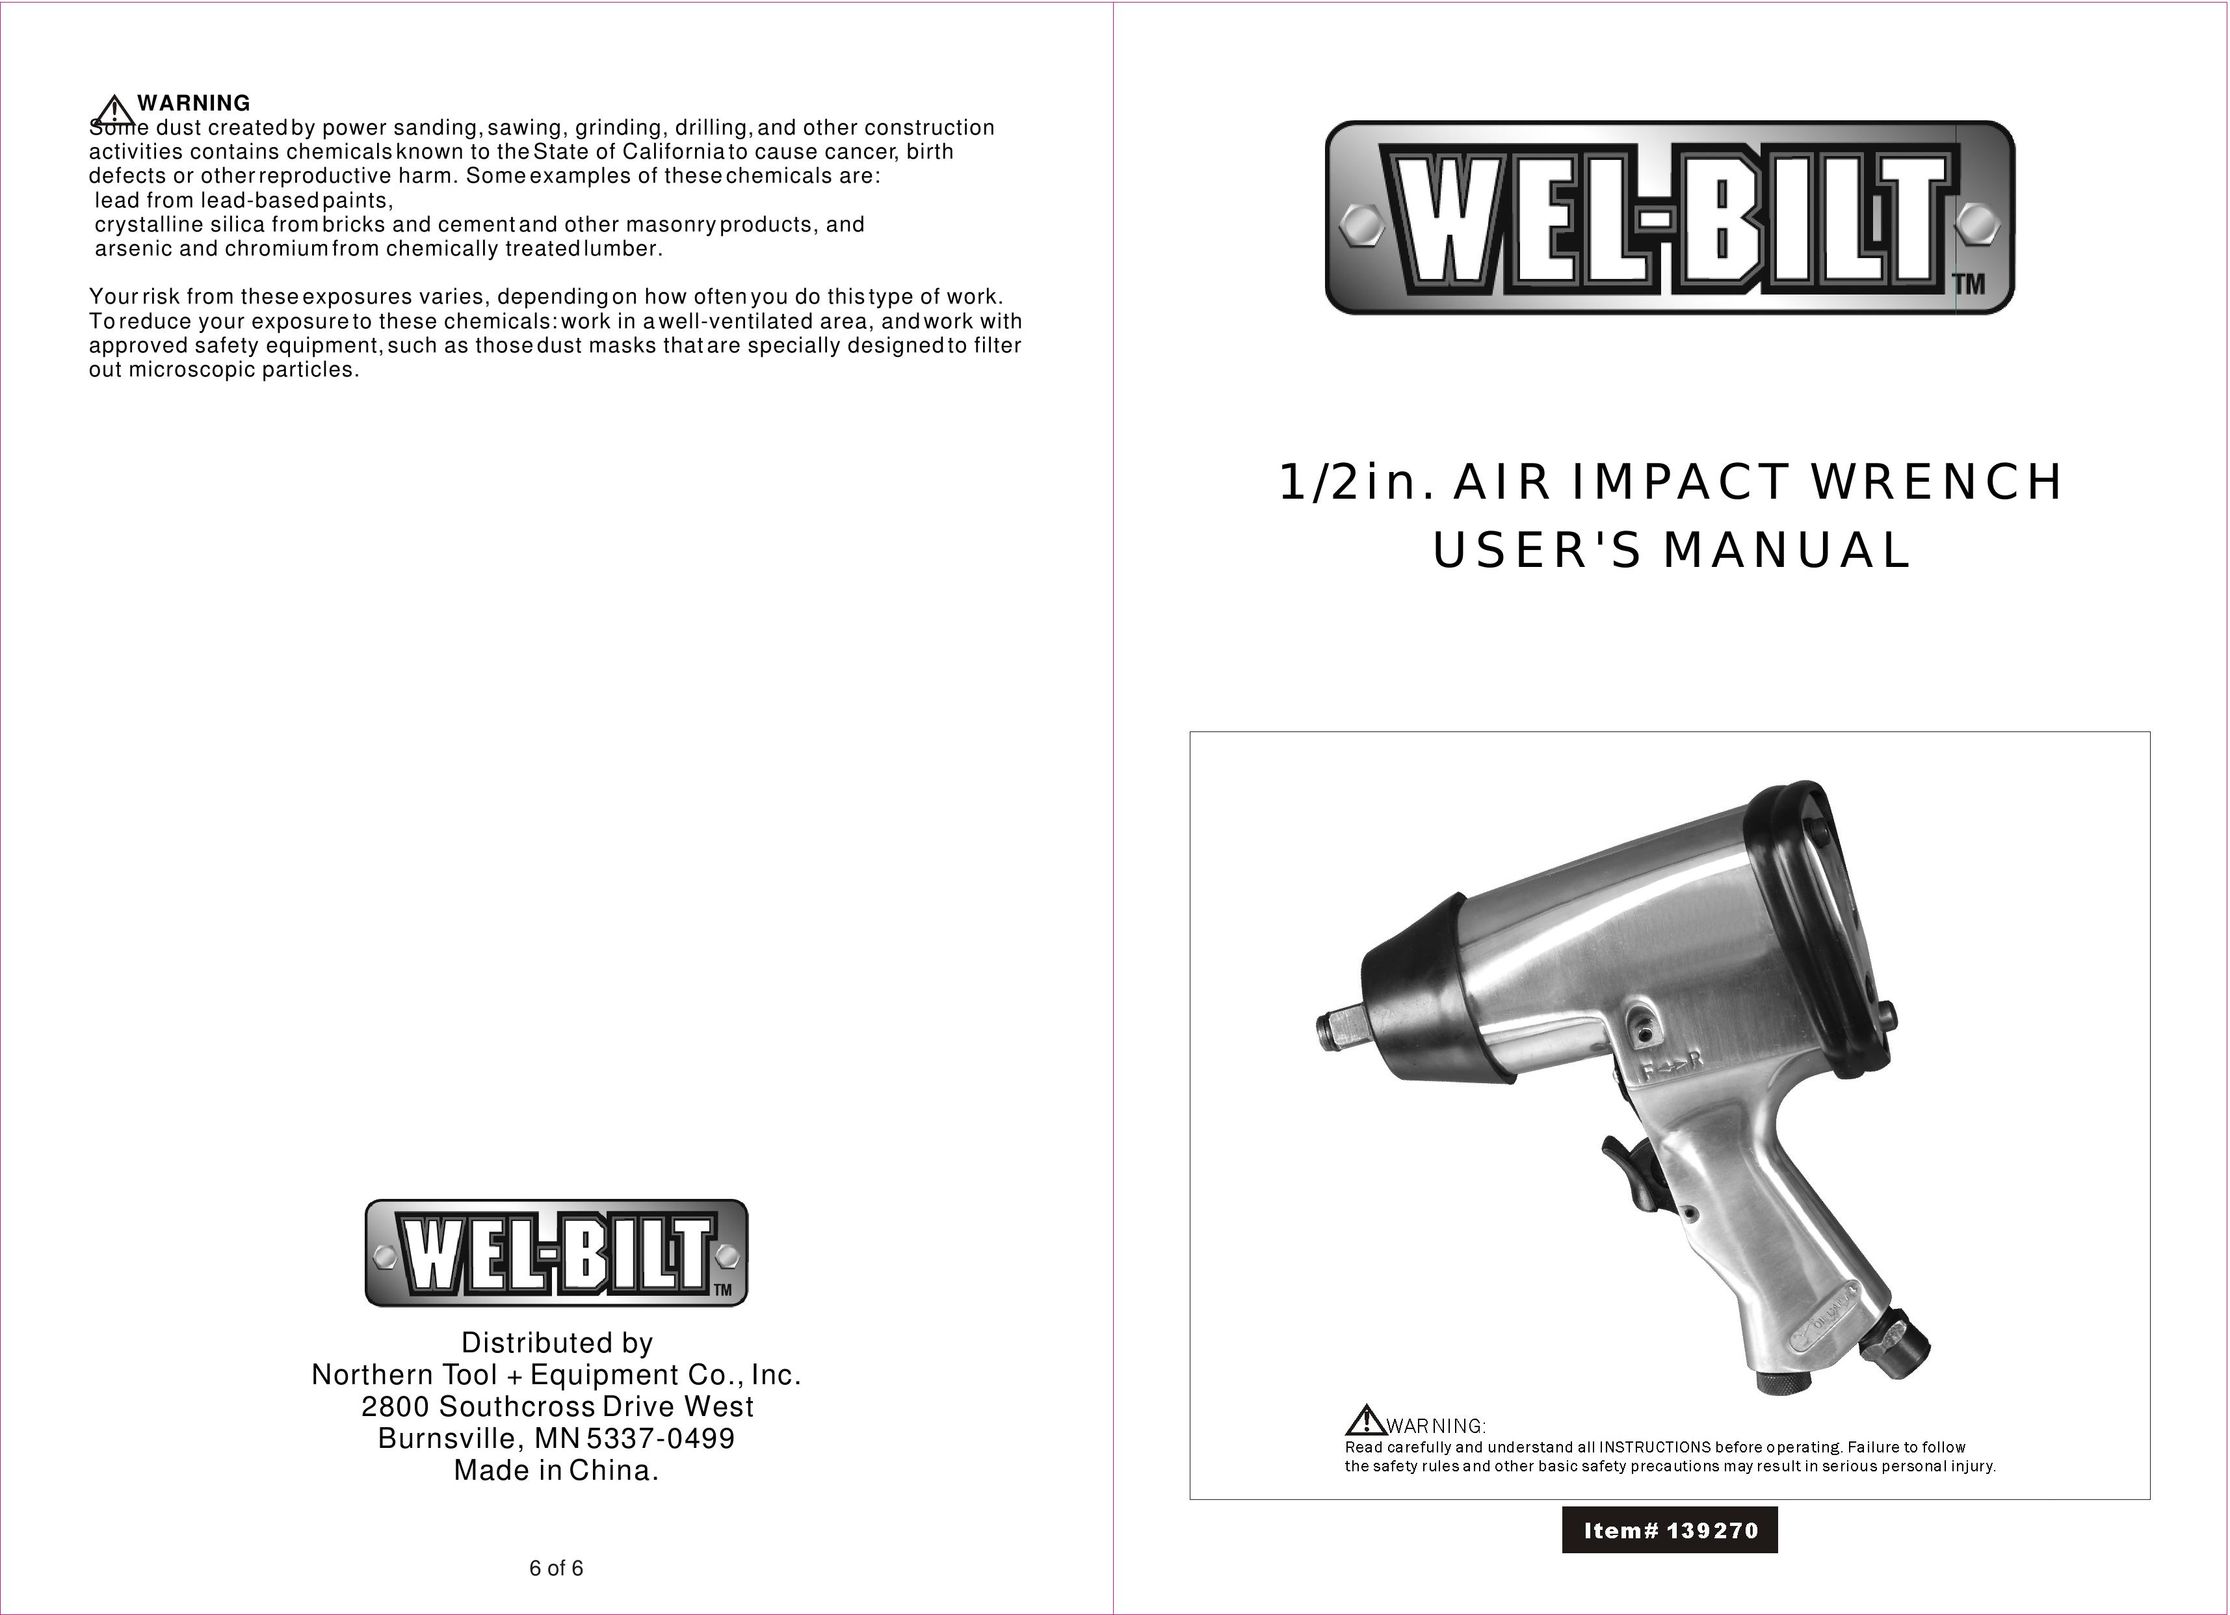 Welbilt 139270 Impact Driver User Manual